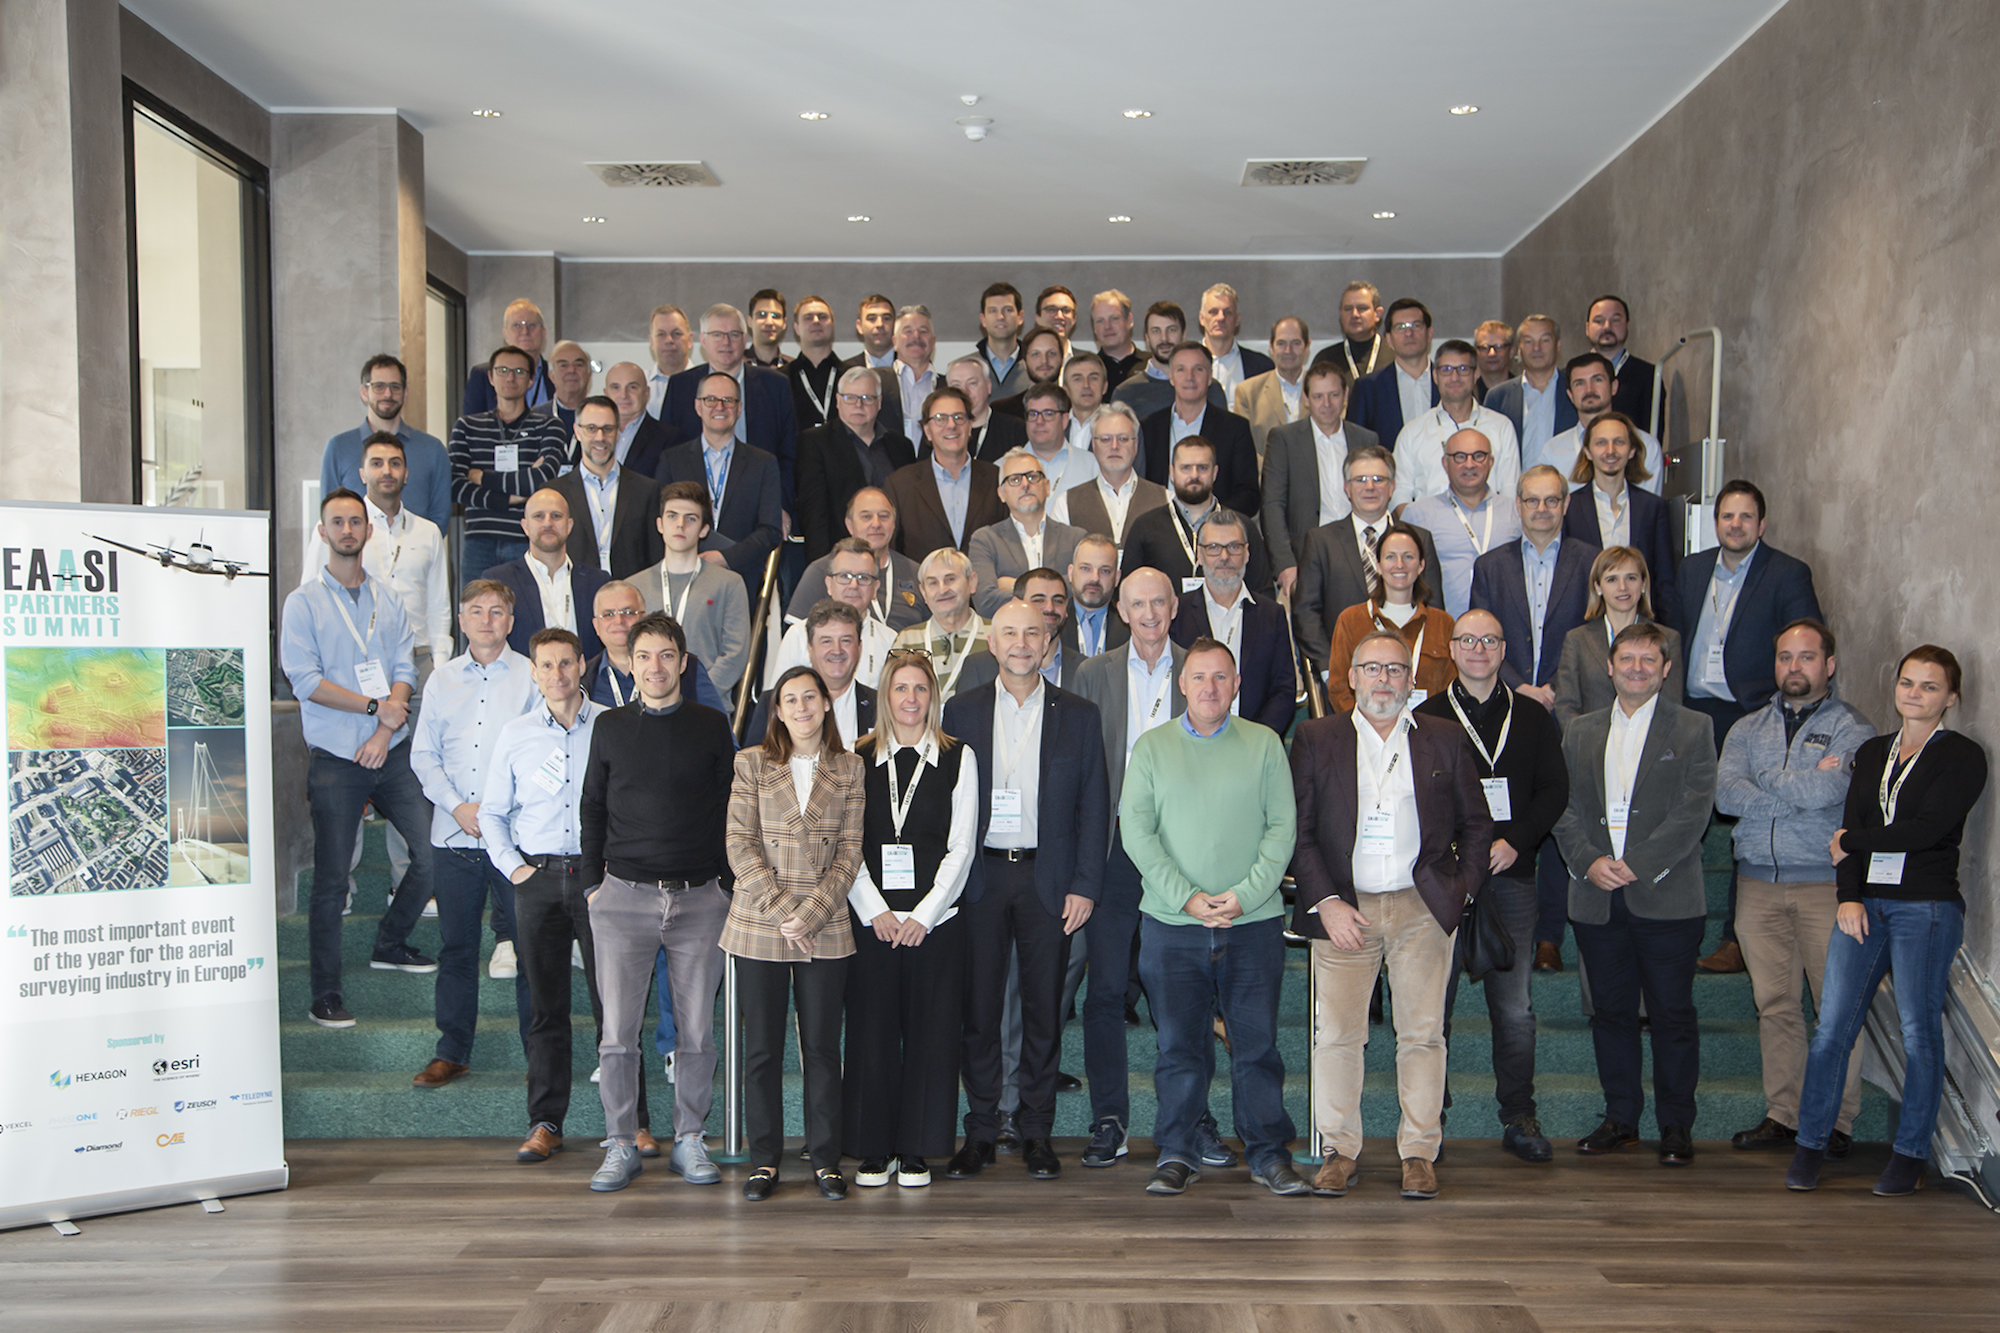 EAASI Summit brings together the aerial surveying industry in Europe